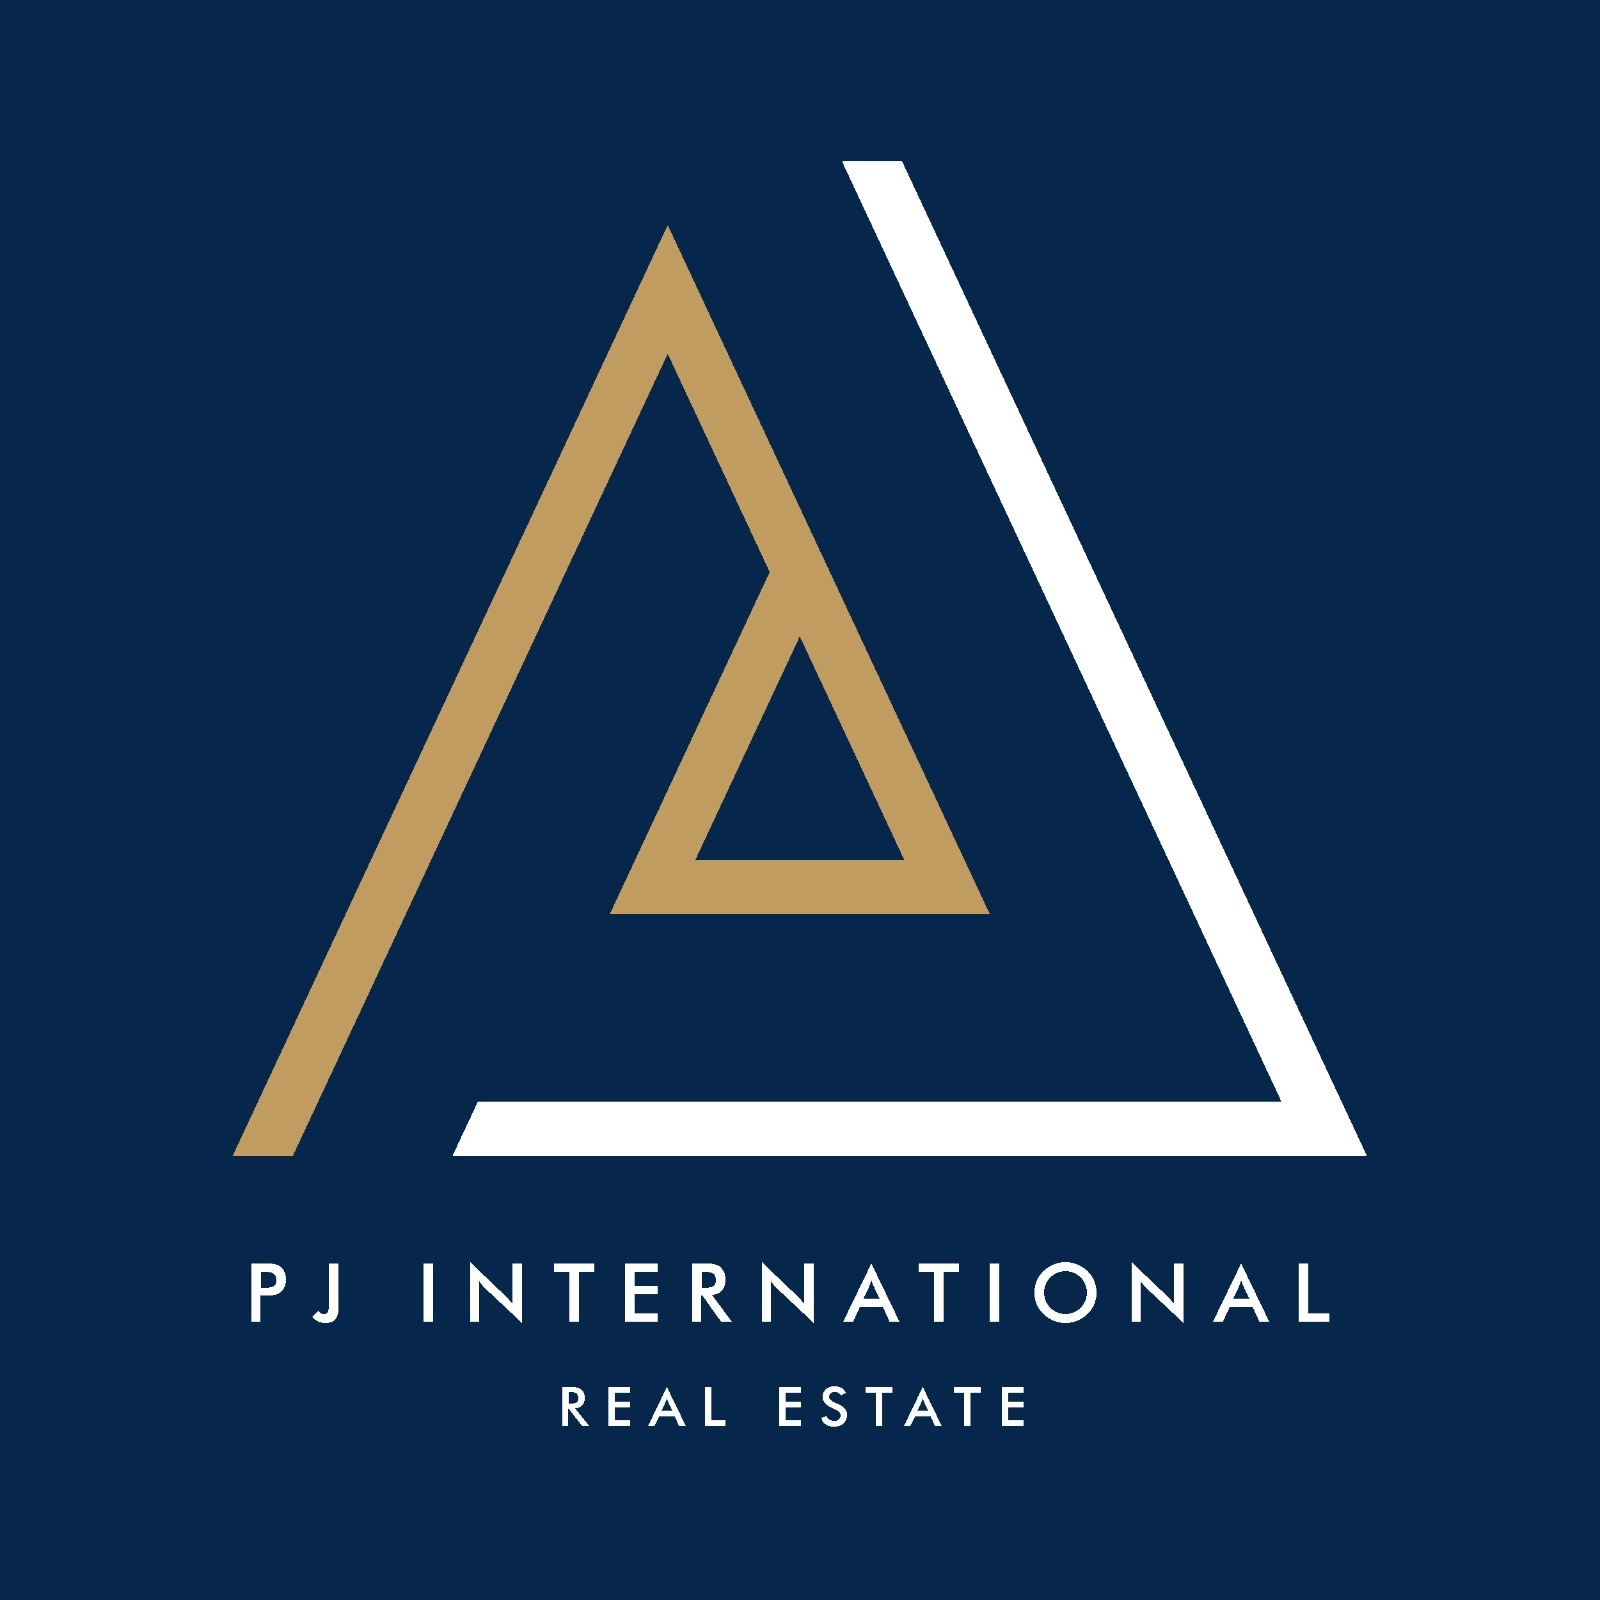 PJ International Real Estate